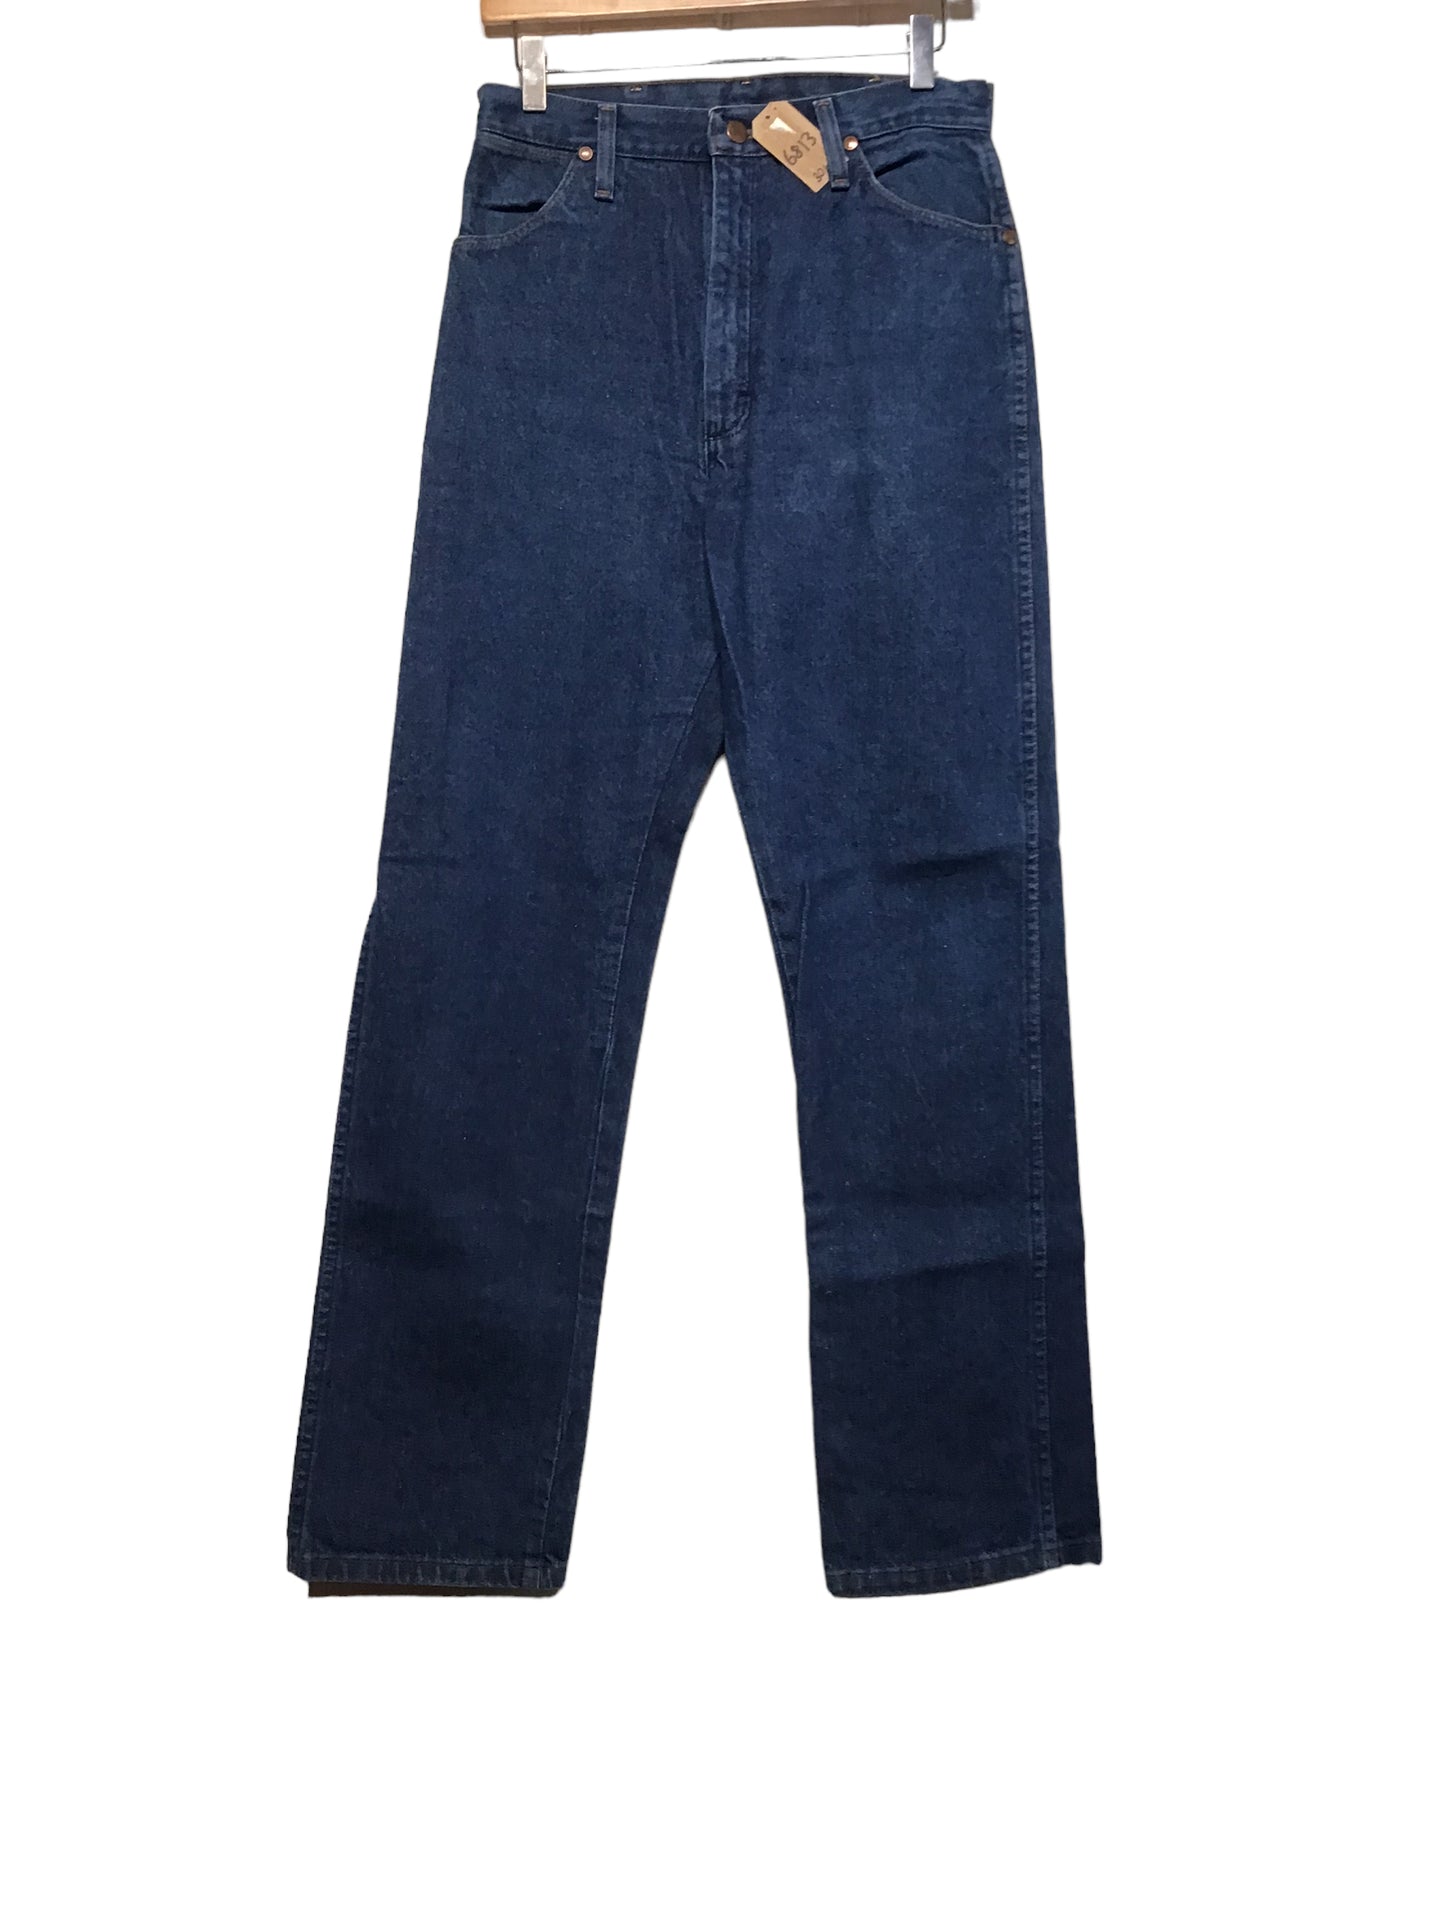 Wrangler Jeans (30x31)